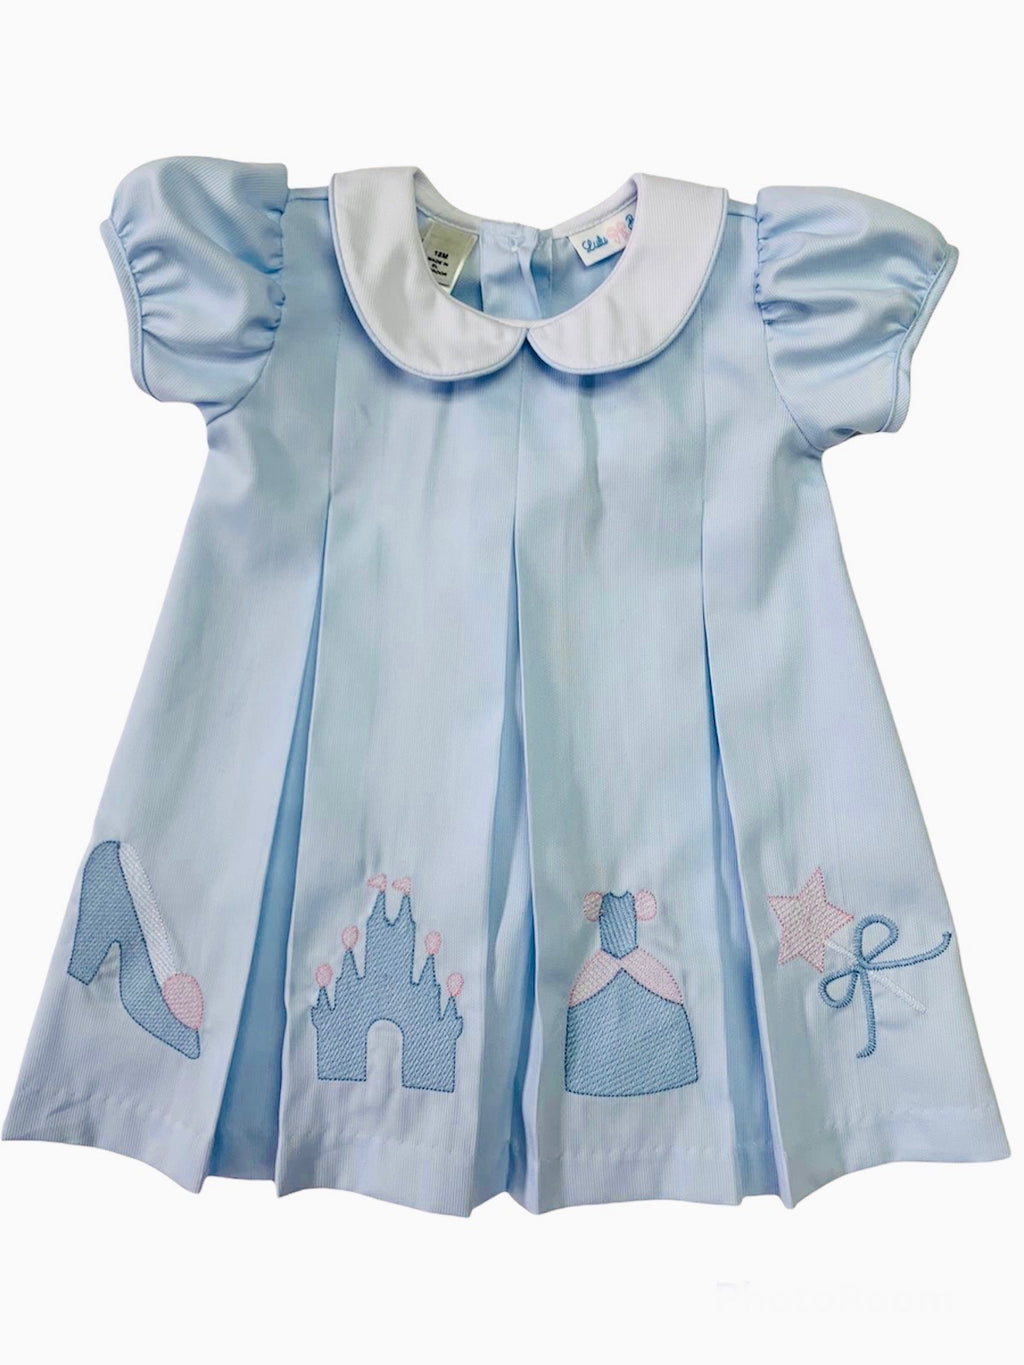 LuLu BeBe Princess Castle Dress